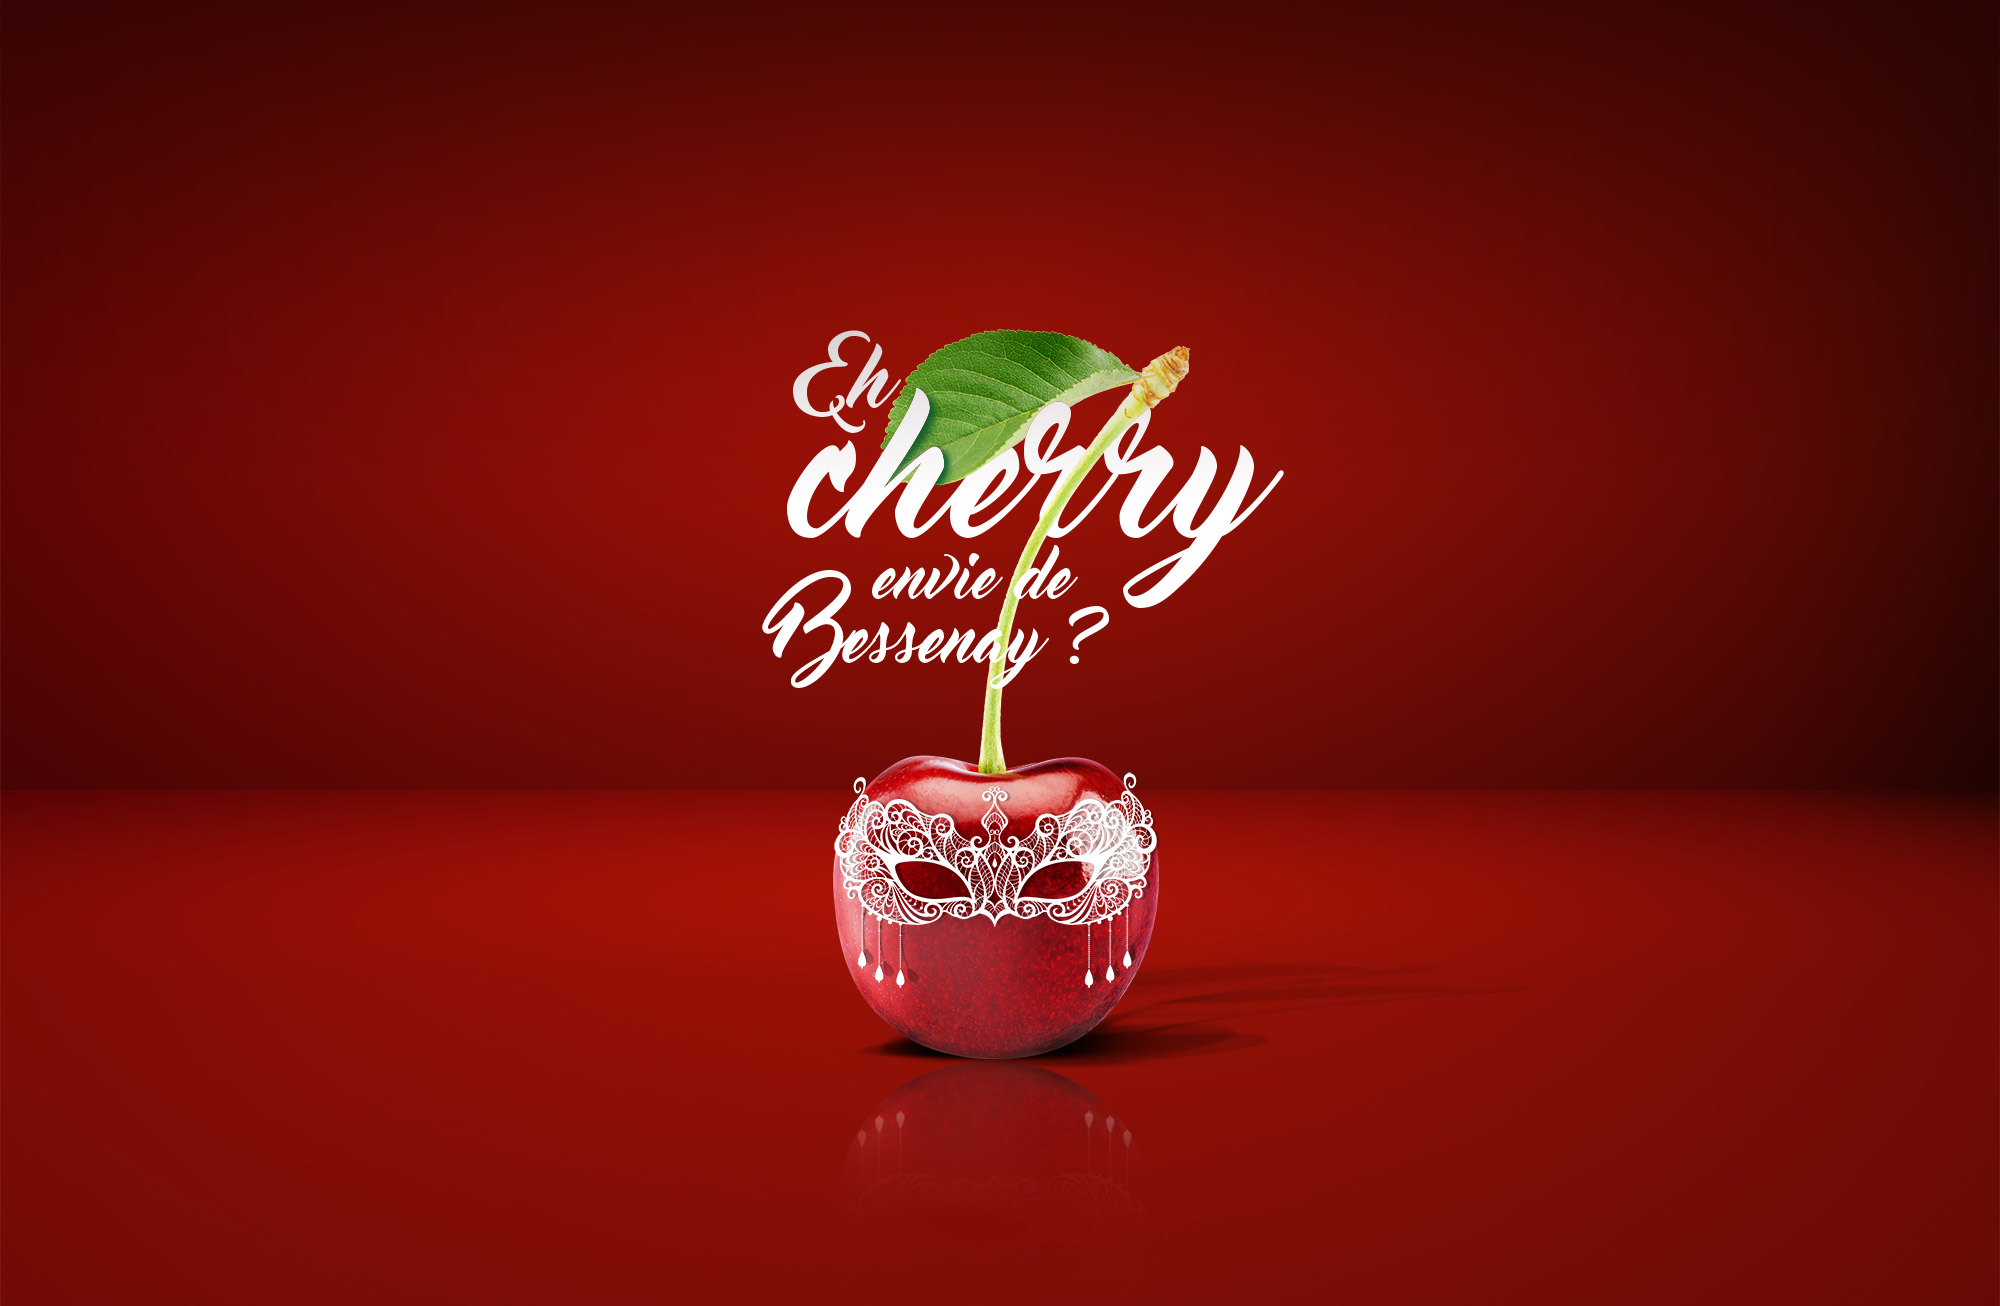 Eh Cherry, Cerise de Bessenay